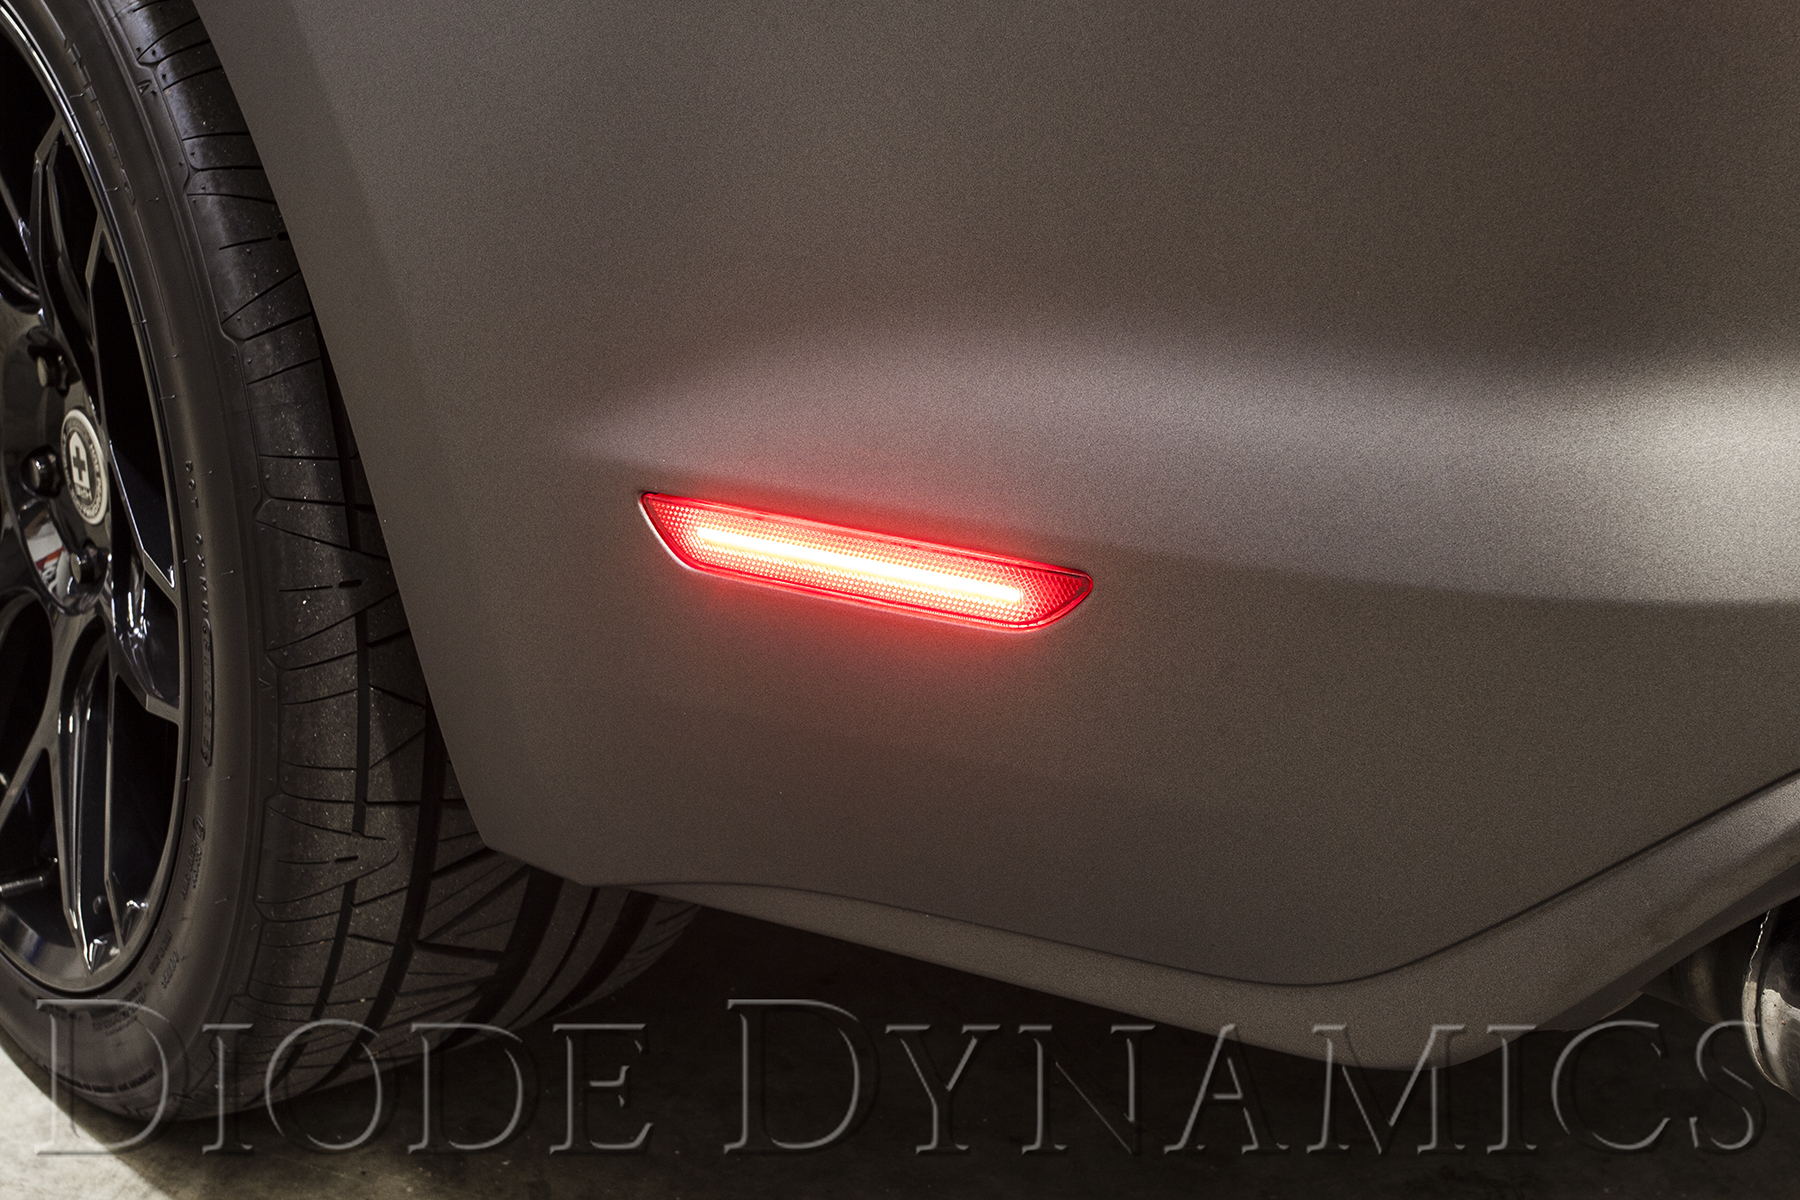 Diode Dynamics - DD0092S - 39mm SMF2 LED Cool White (single) – Circuit Demon